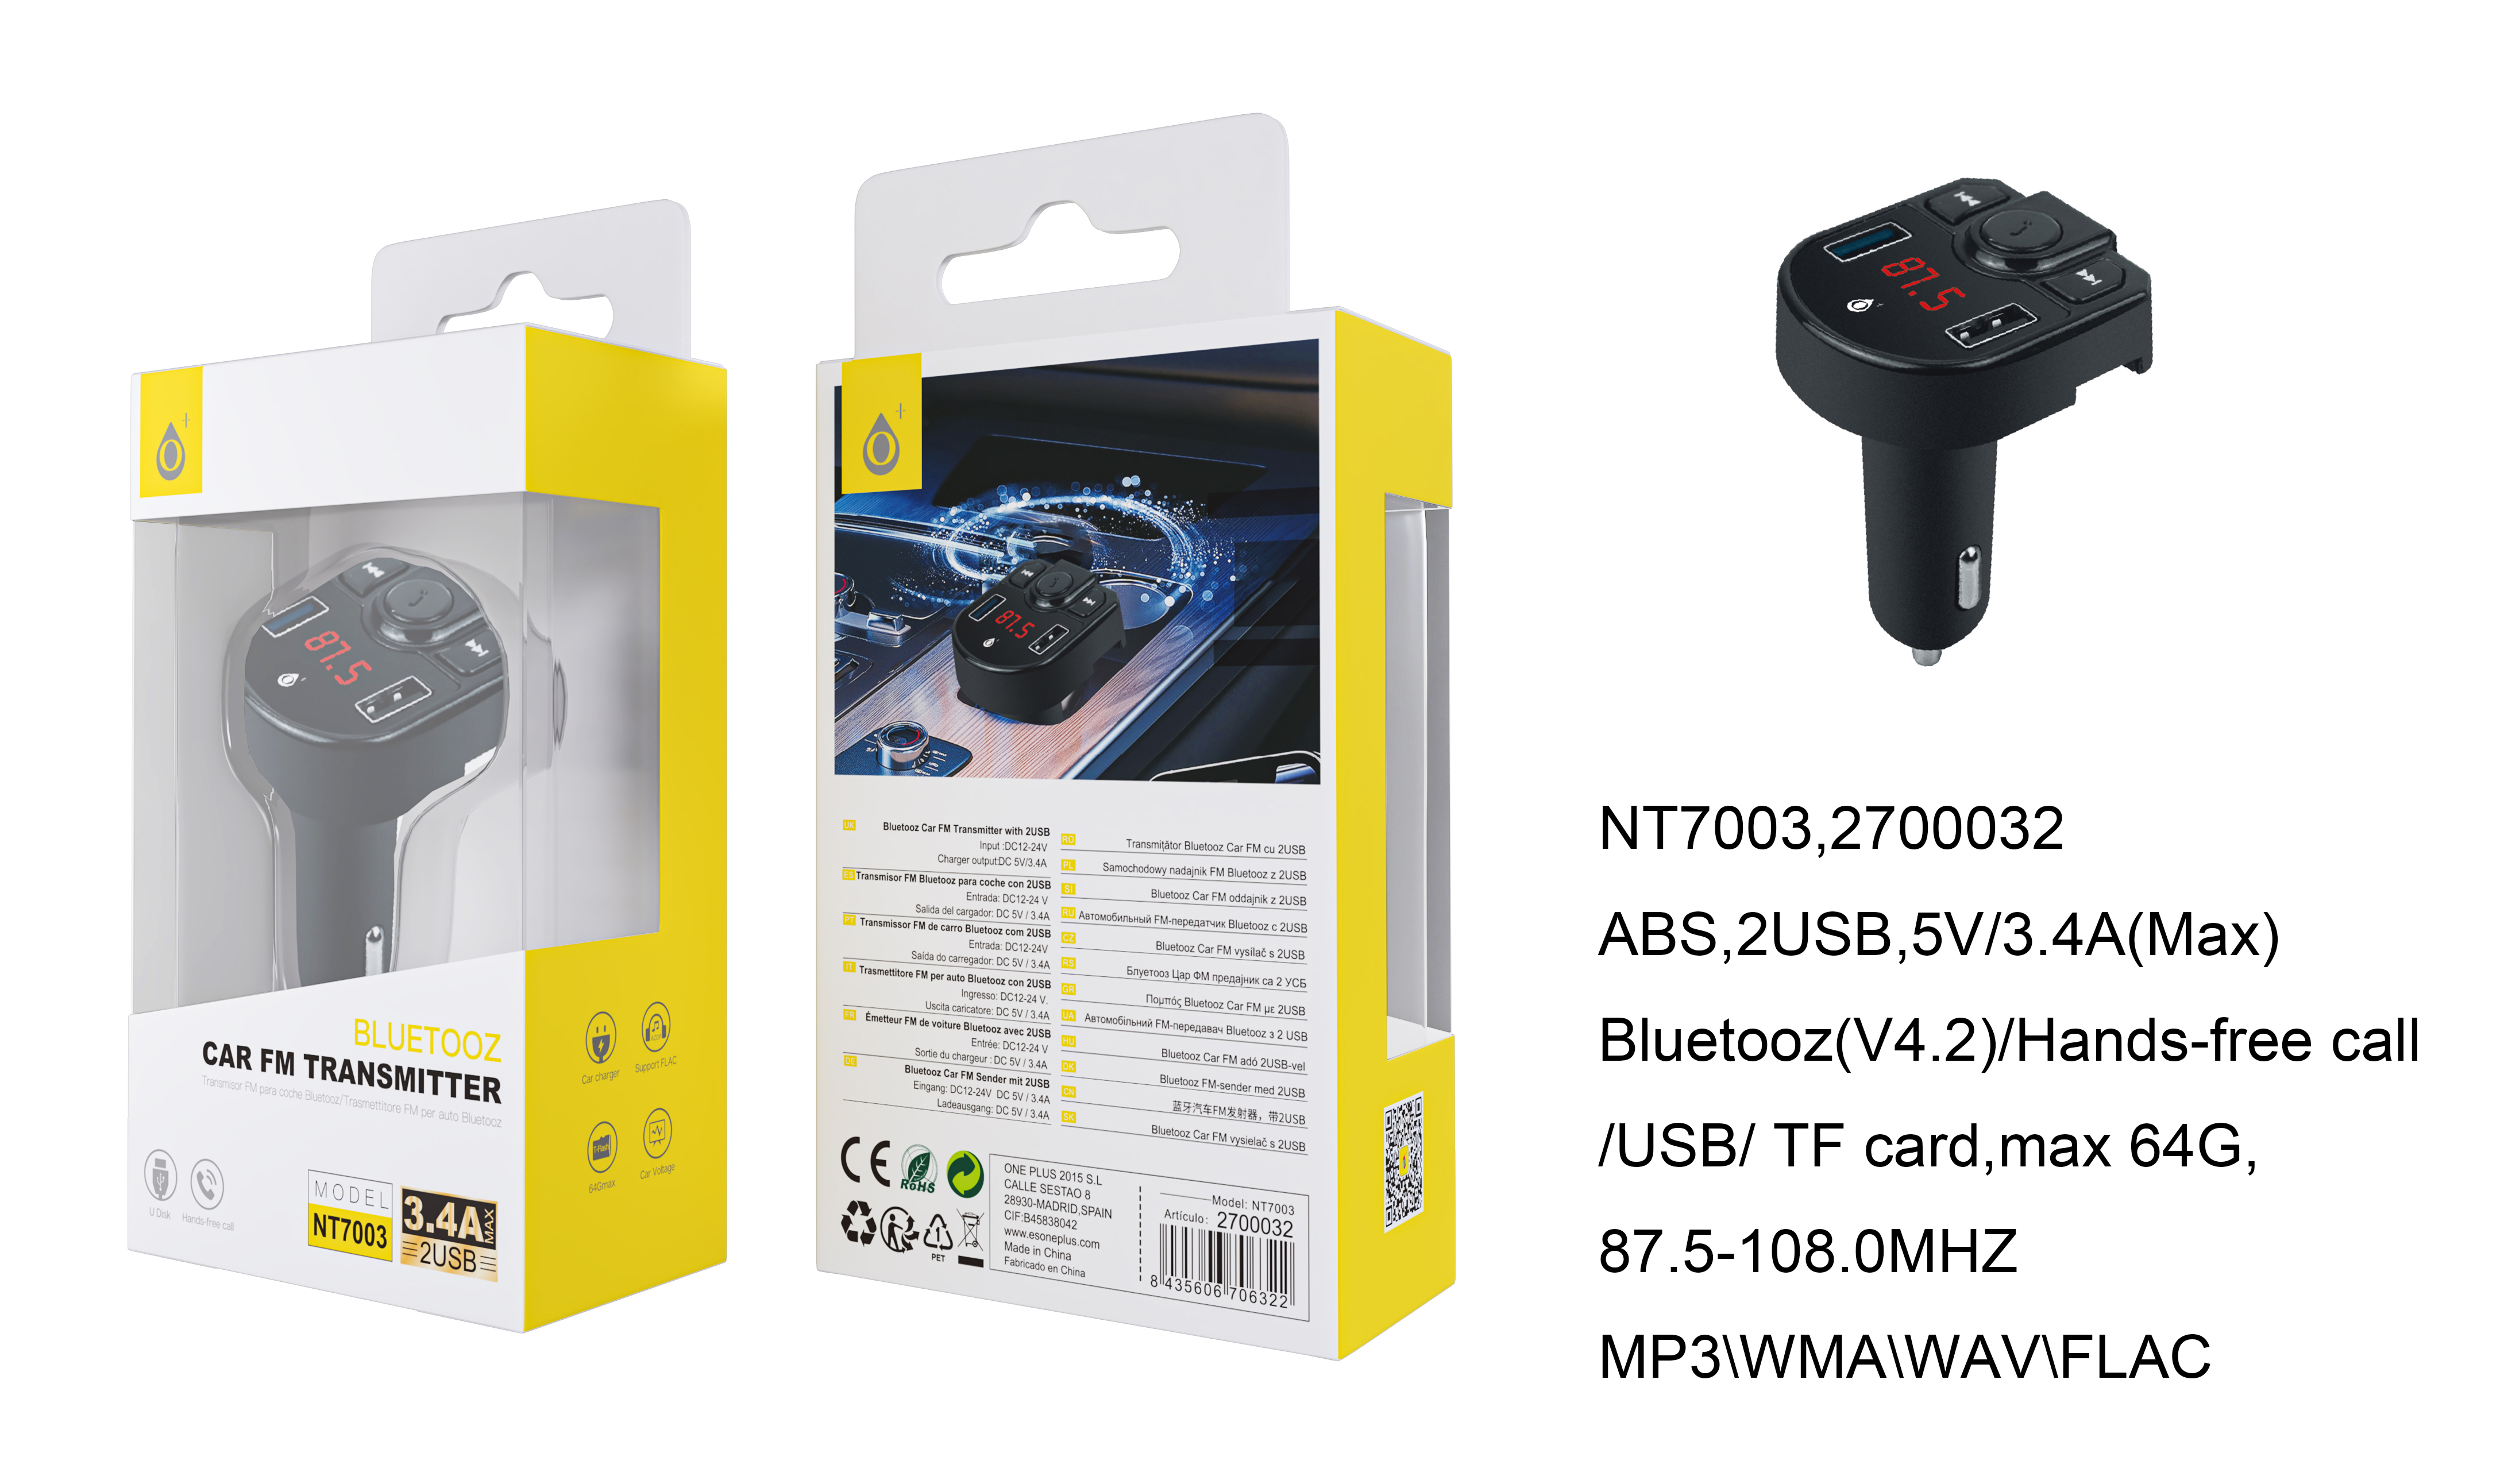 NE NT7003 Transmisor Blutooth 4,2 De FM Con Microfono Y Pantalla LED, BTS/USB/TF CARD (64MAX), 2USB 3,1A Max, Negro